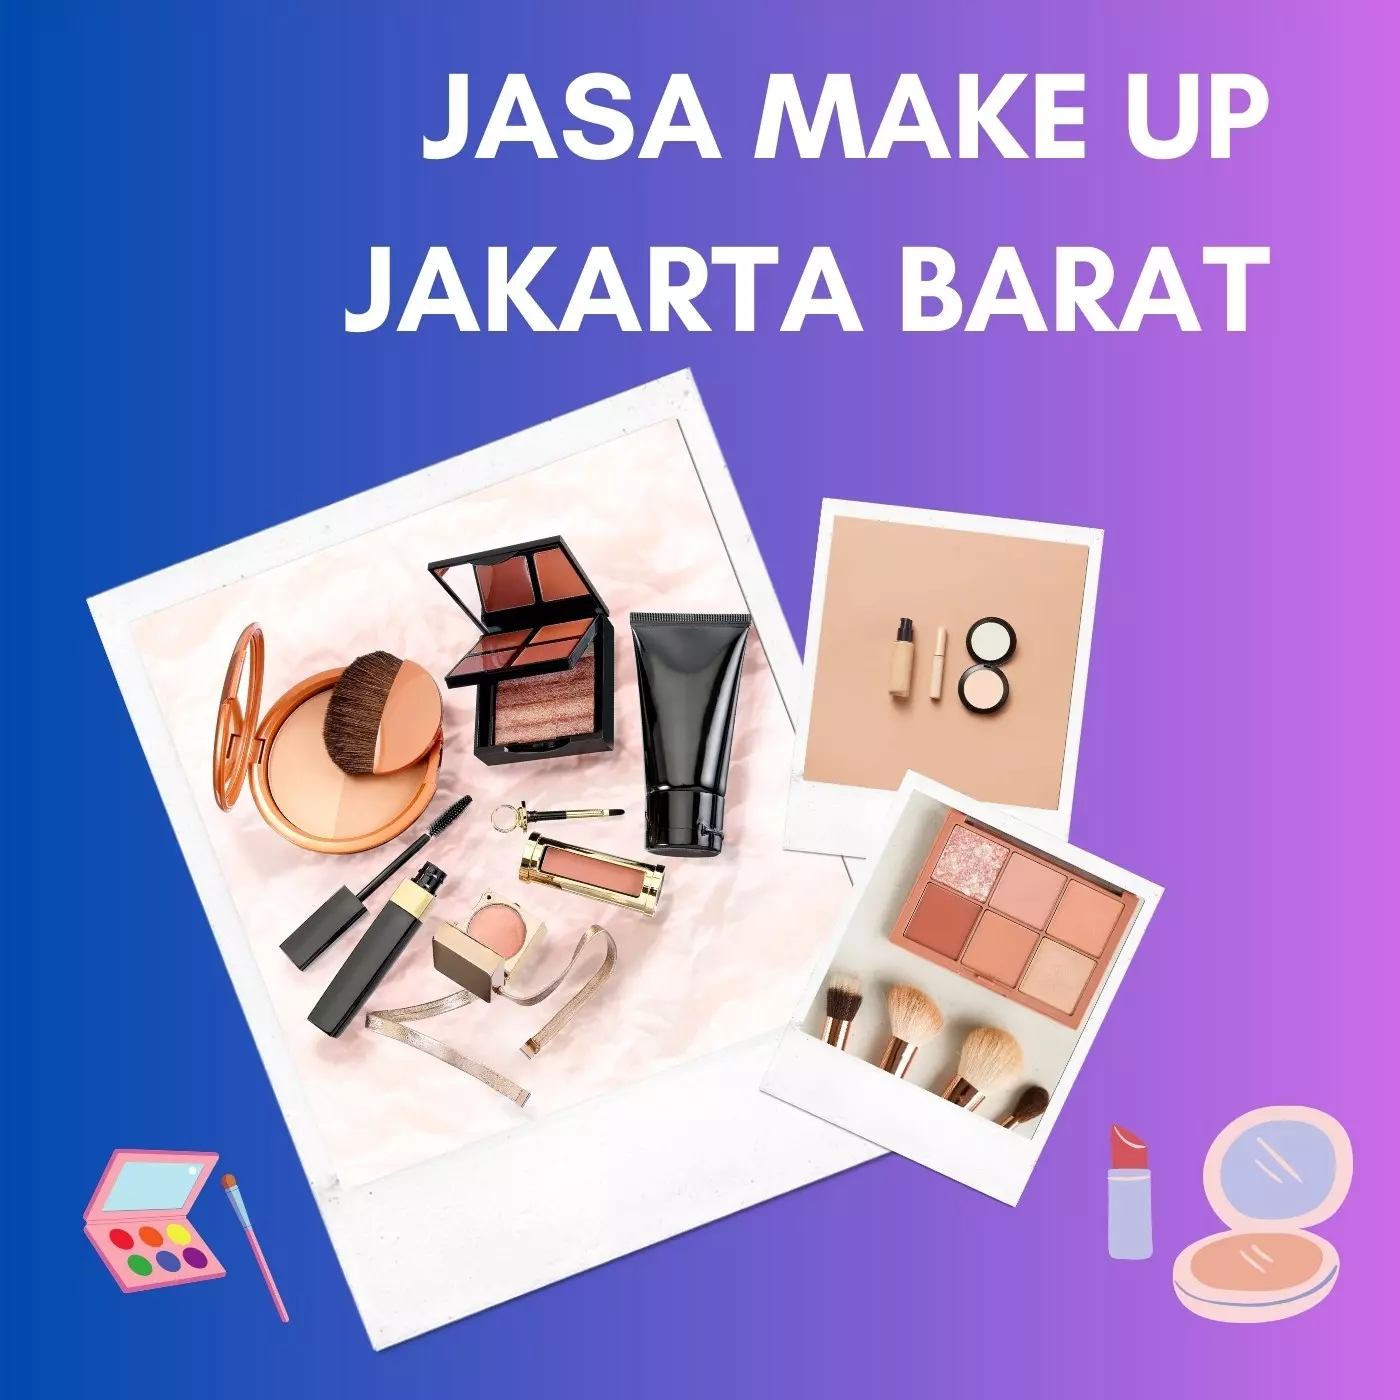 Jasa Make Up Jakarta Barat